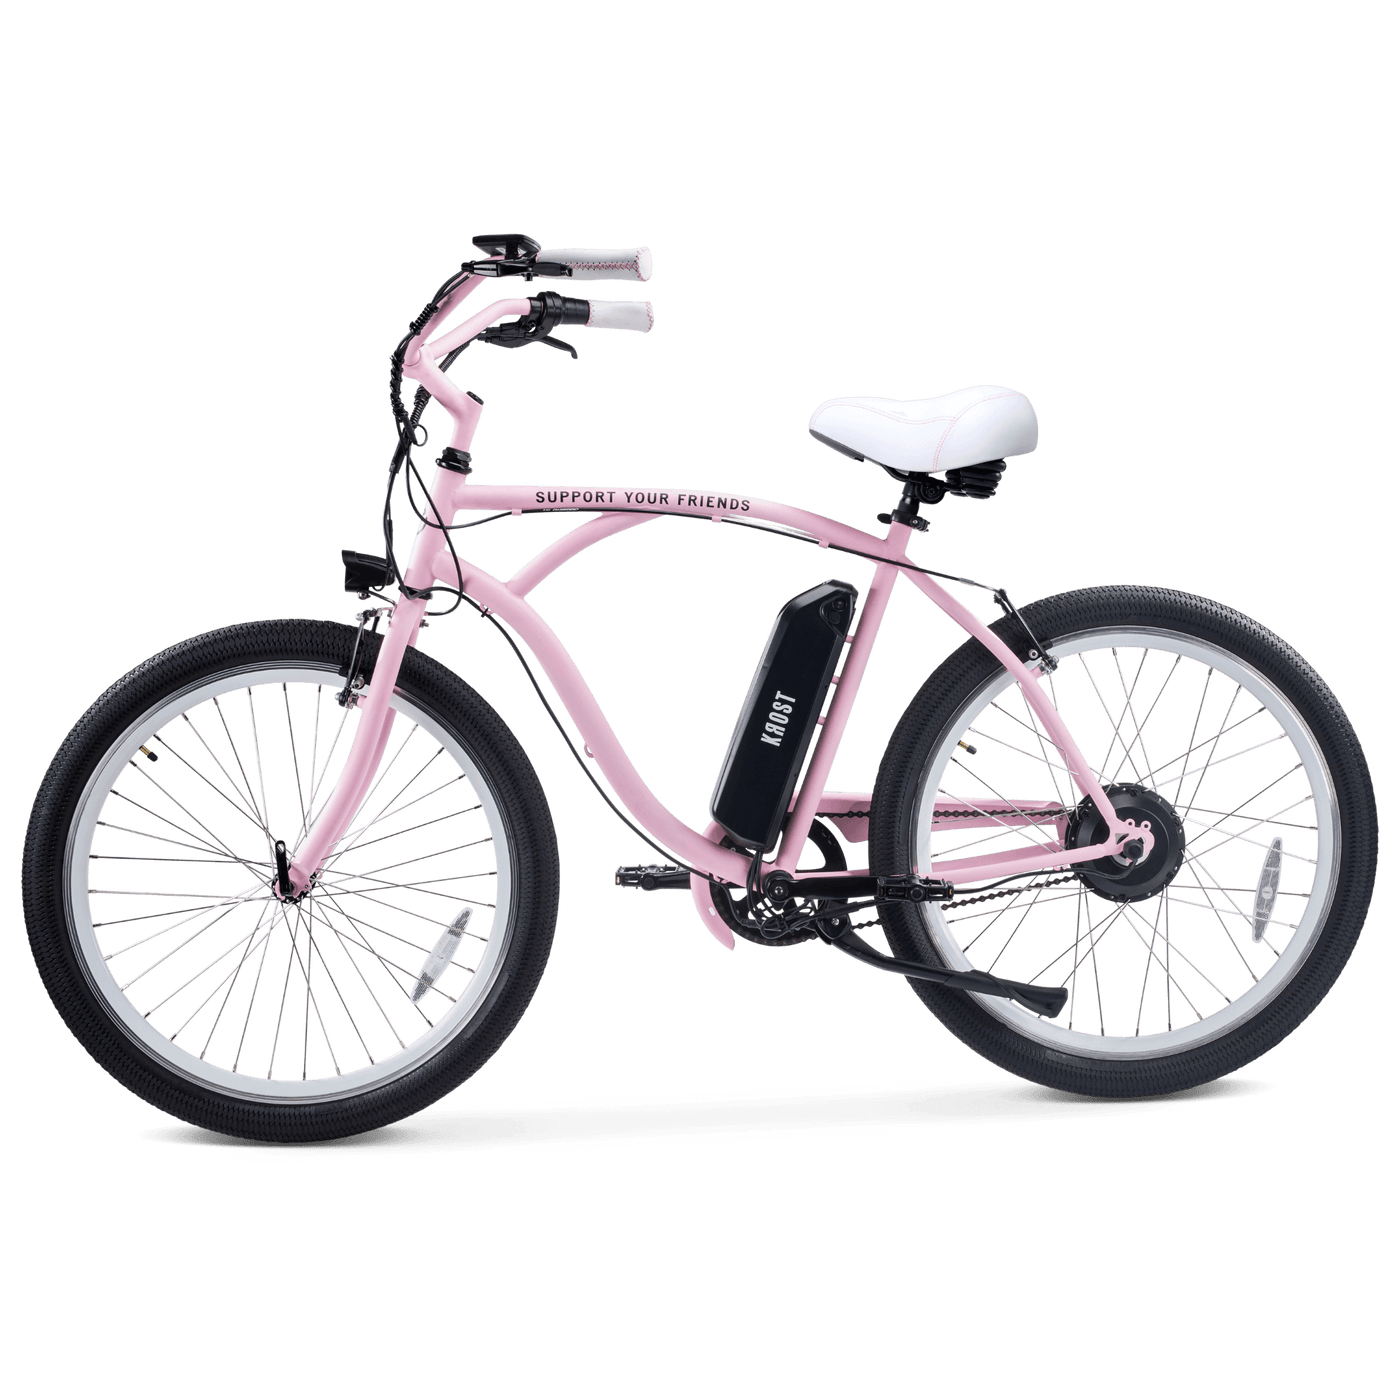 SWFT Krost 46.8V 10AH Electric Bike - Rider Cycles 